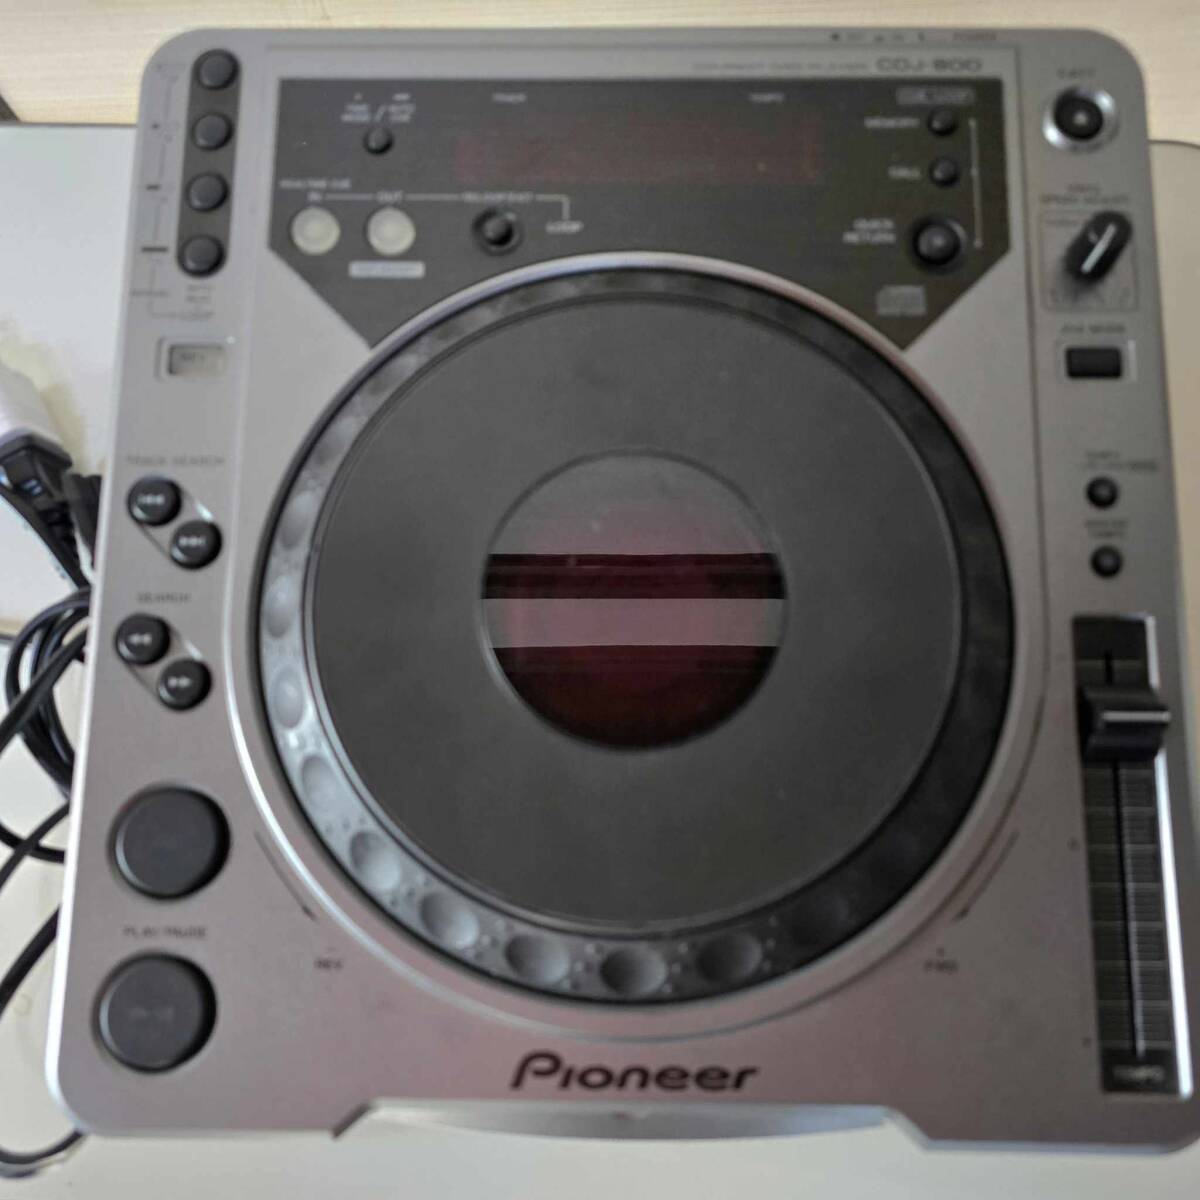  Pioneer DJ for CDJ800 2 pcs. set operation has been confirmed .